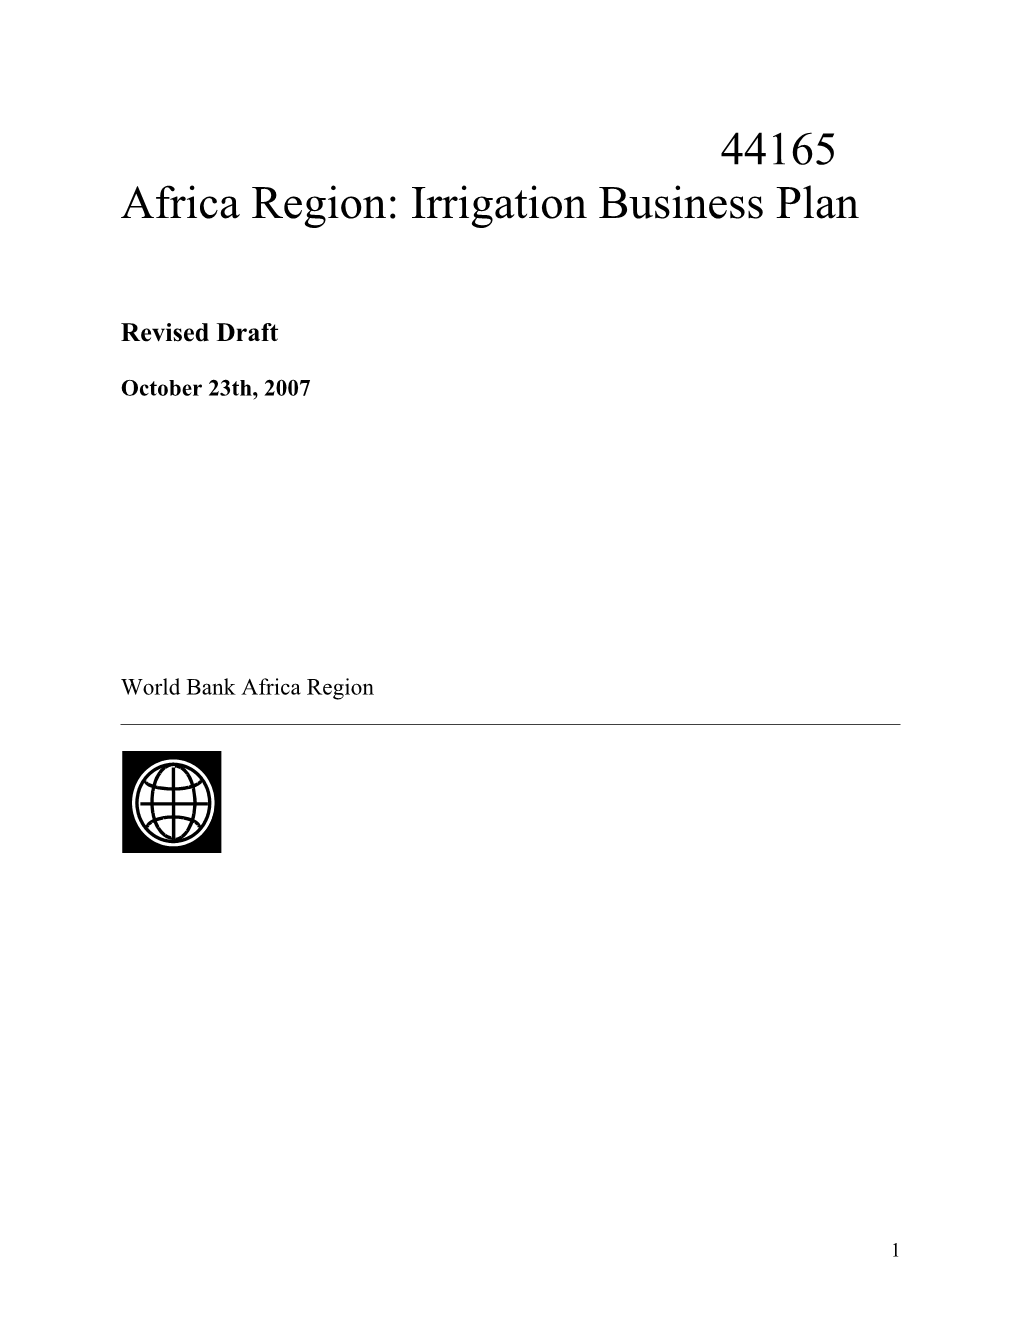 Irrigation Business Plan